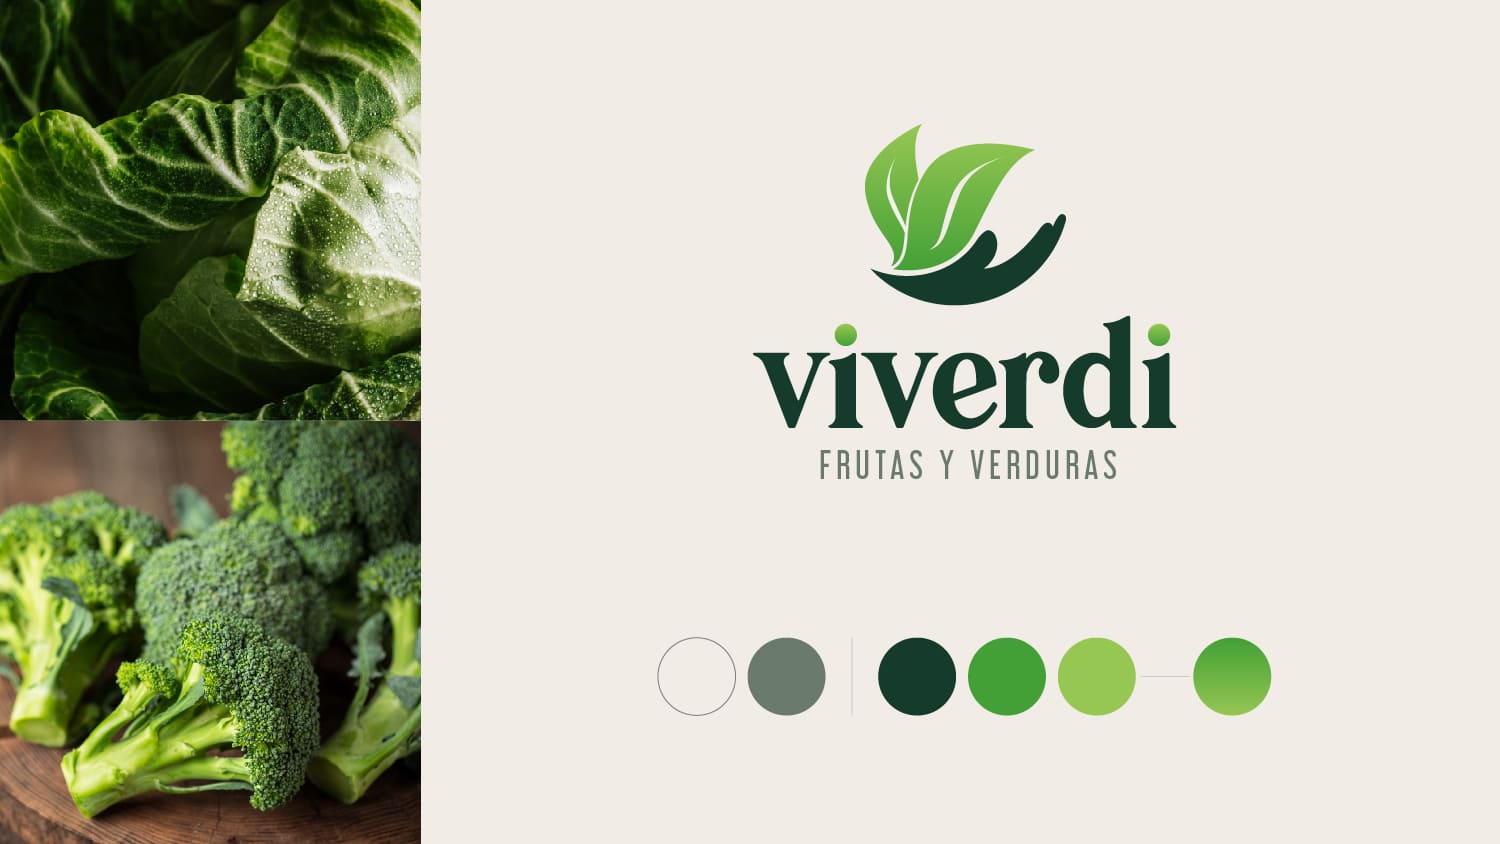 Viverdi logo and colors